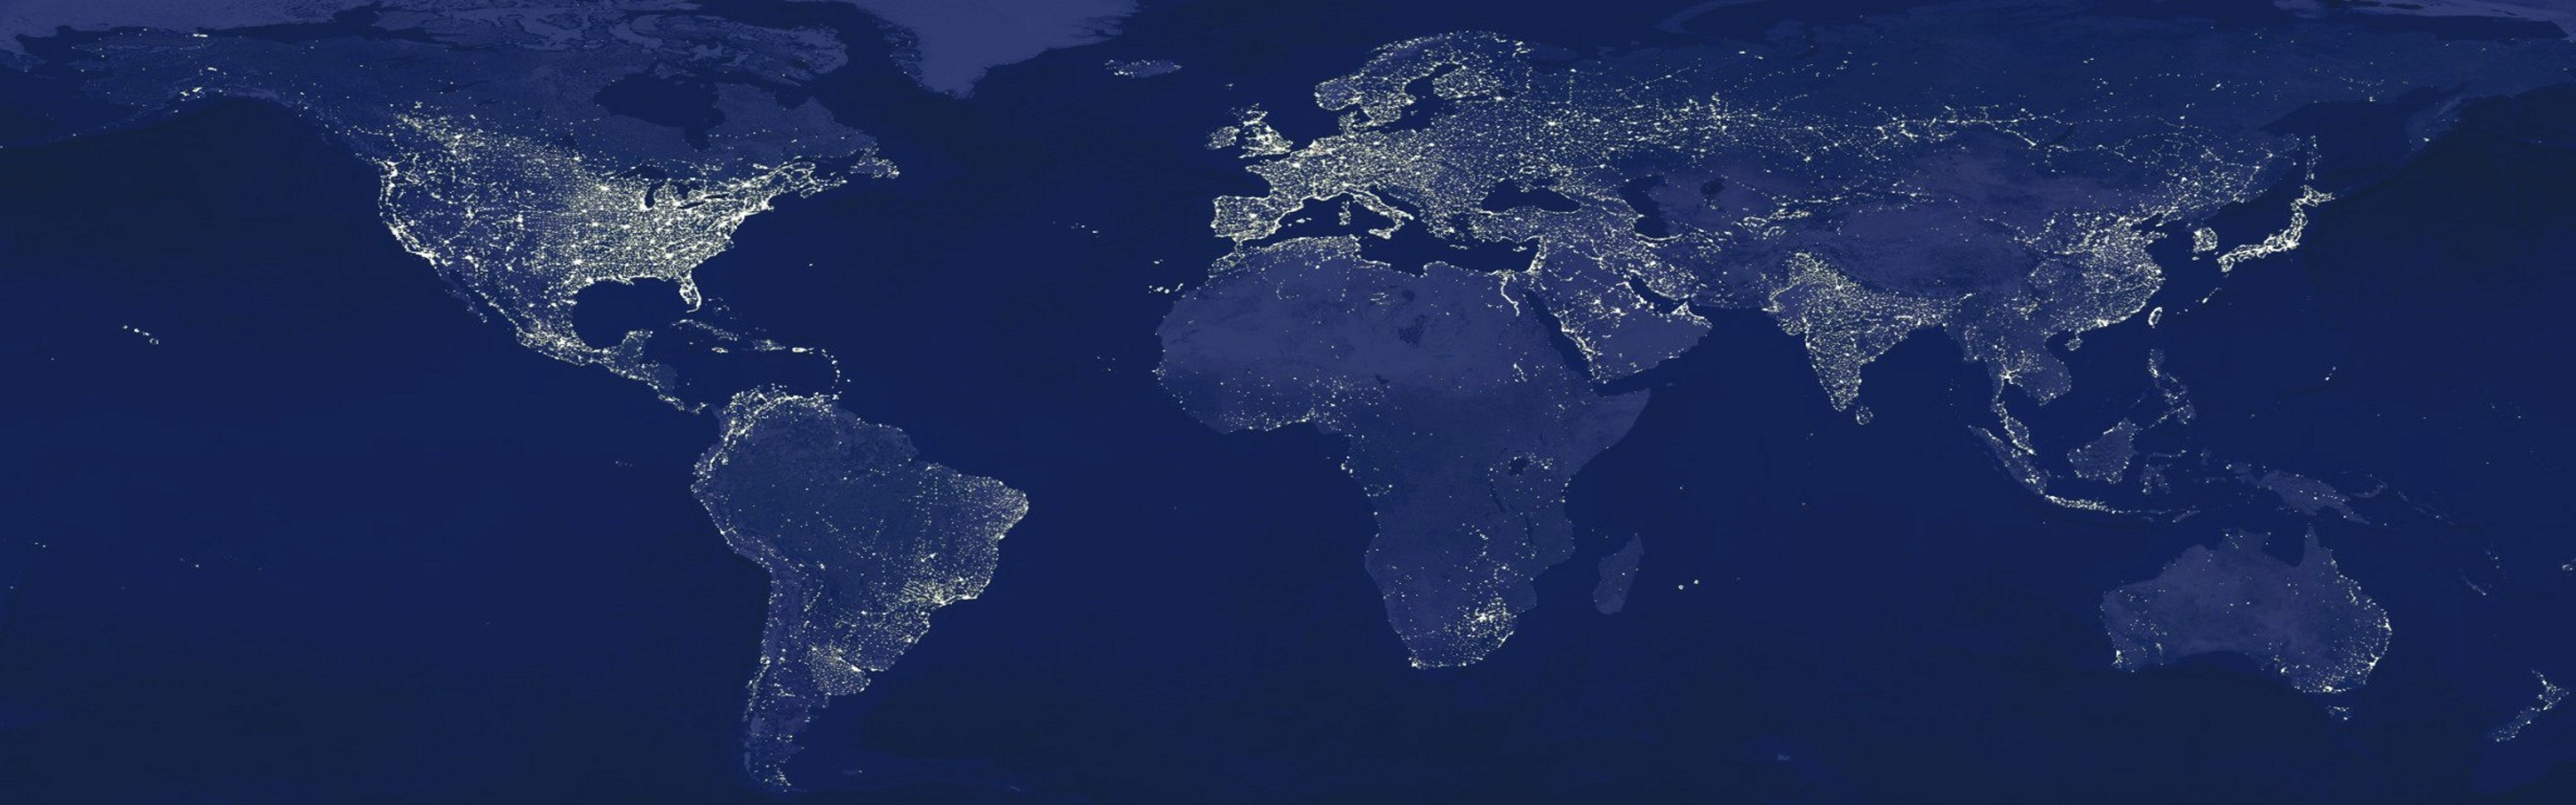 3840x1200 light, night, Earth, globes, maps, world map - Free Wallpaper /  WallpaperJam.com